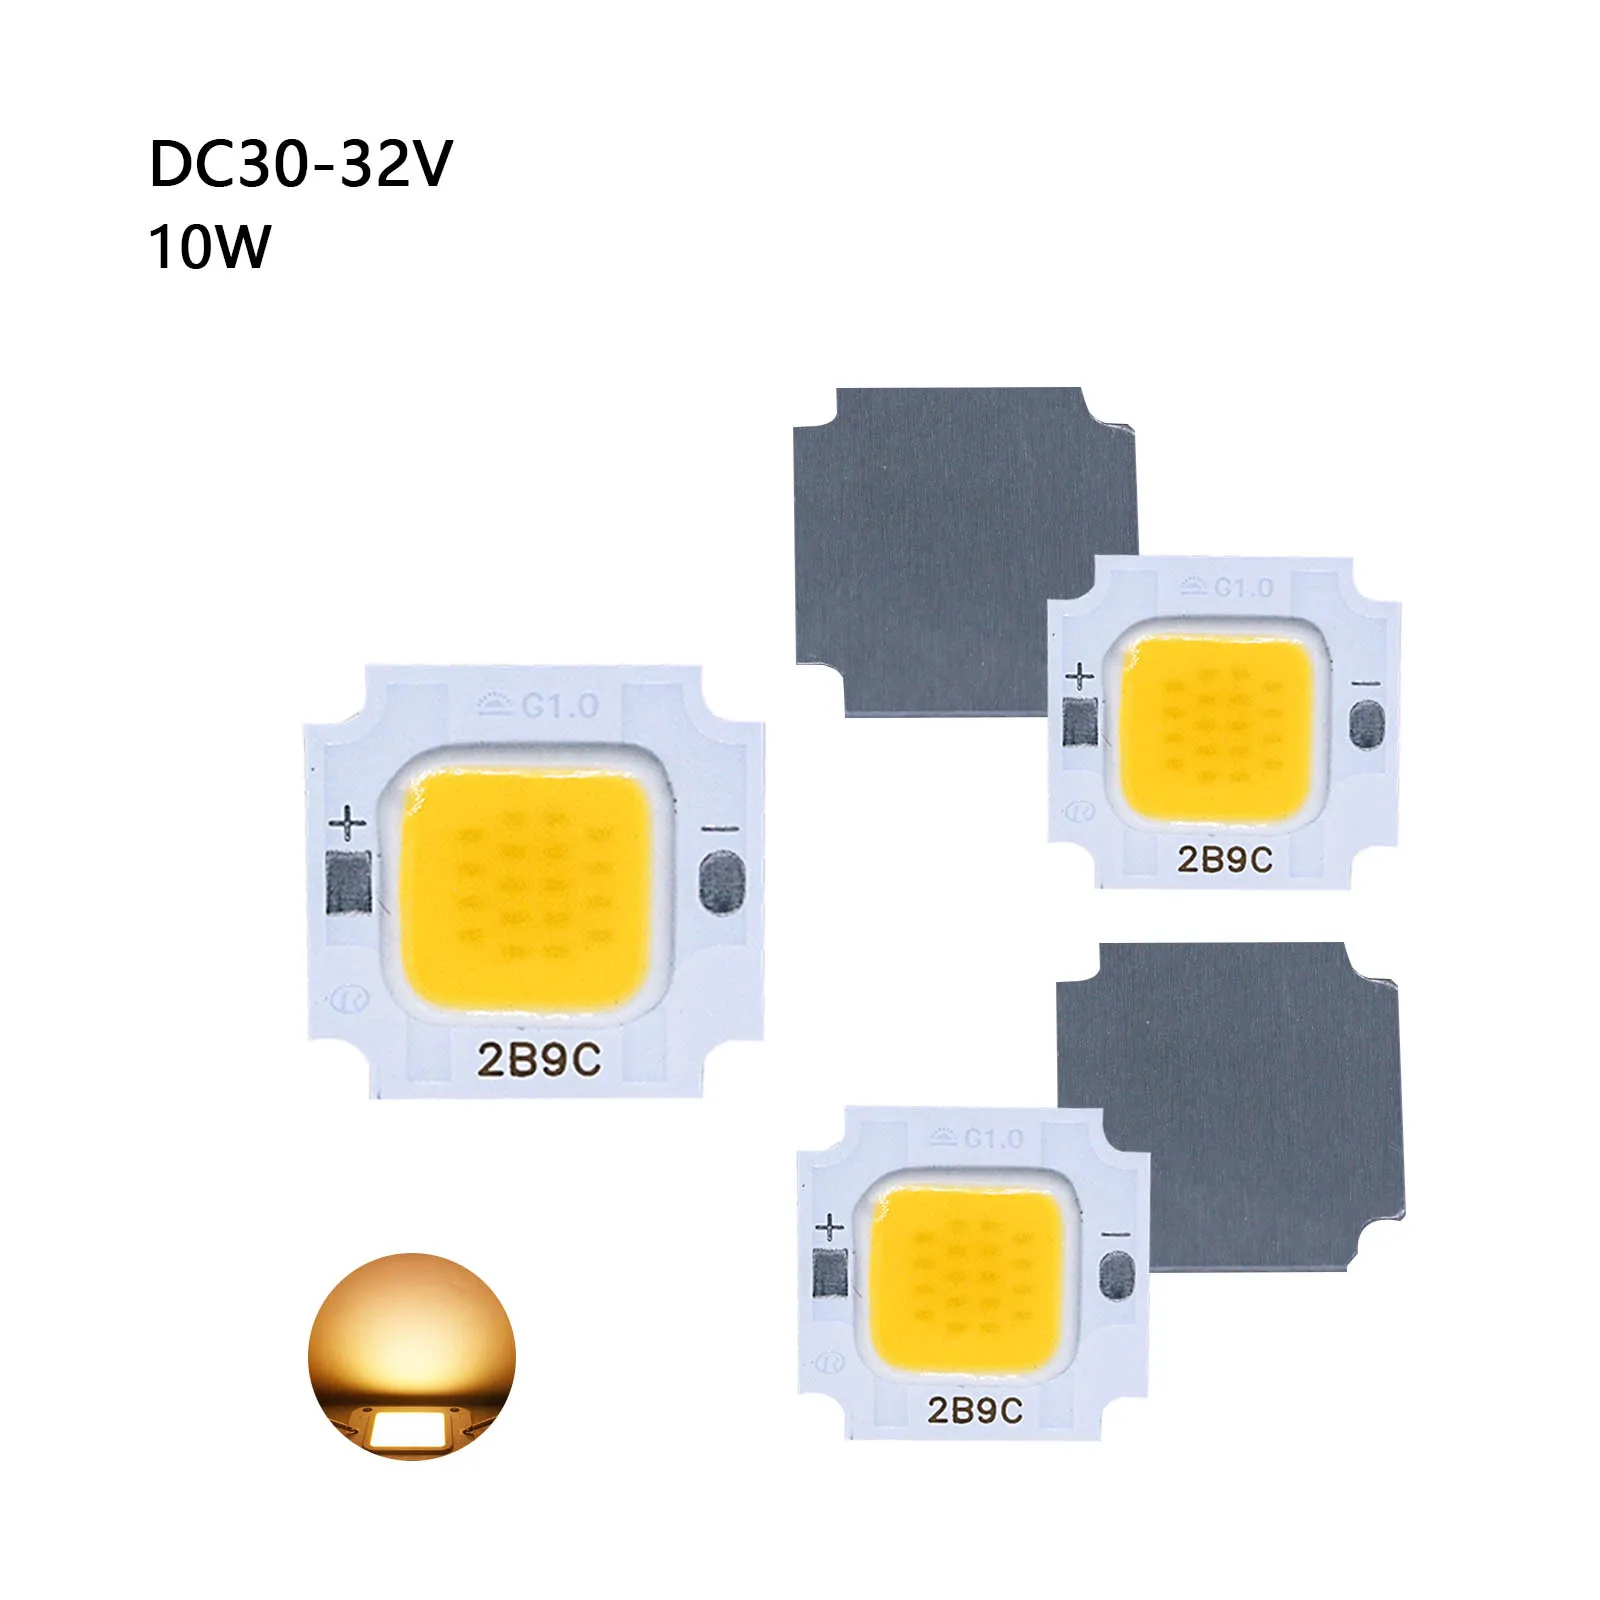 

5 pcs High Power 300mA LED COB Chips 10W DC 30-32V Light Beads SMD DIY For LED Bulb Warm White Flood Light Spotlight Portable